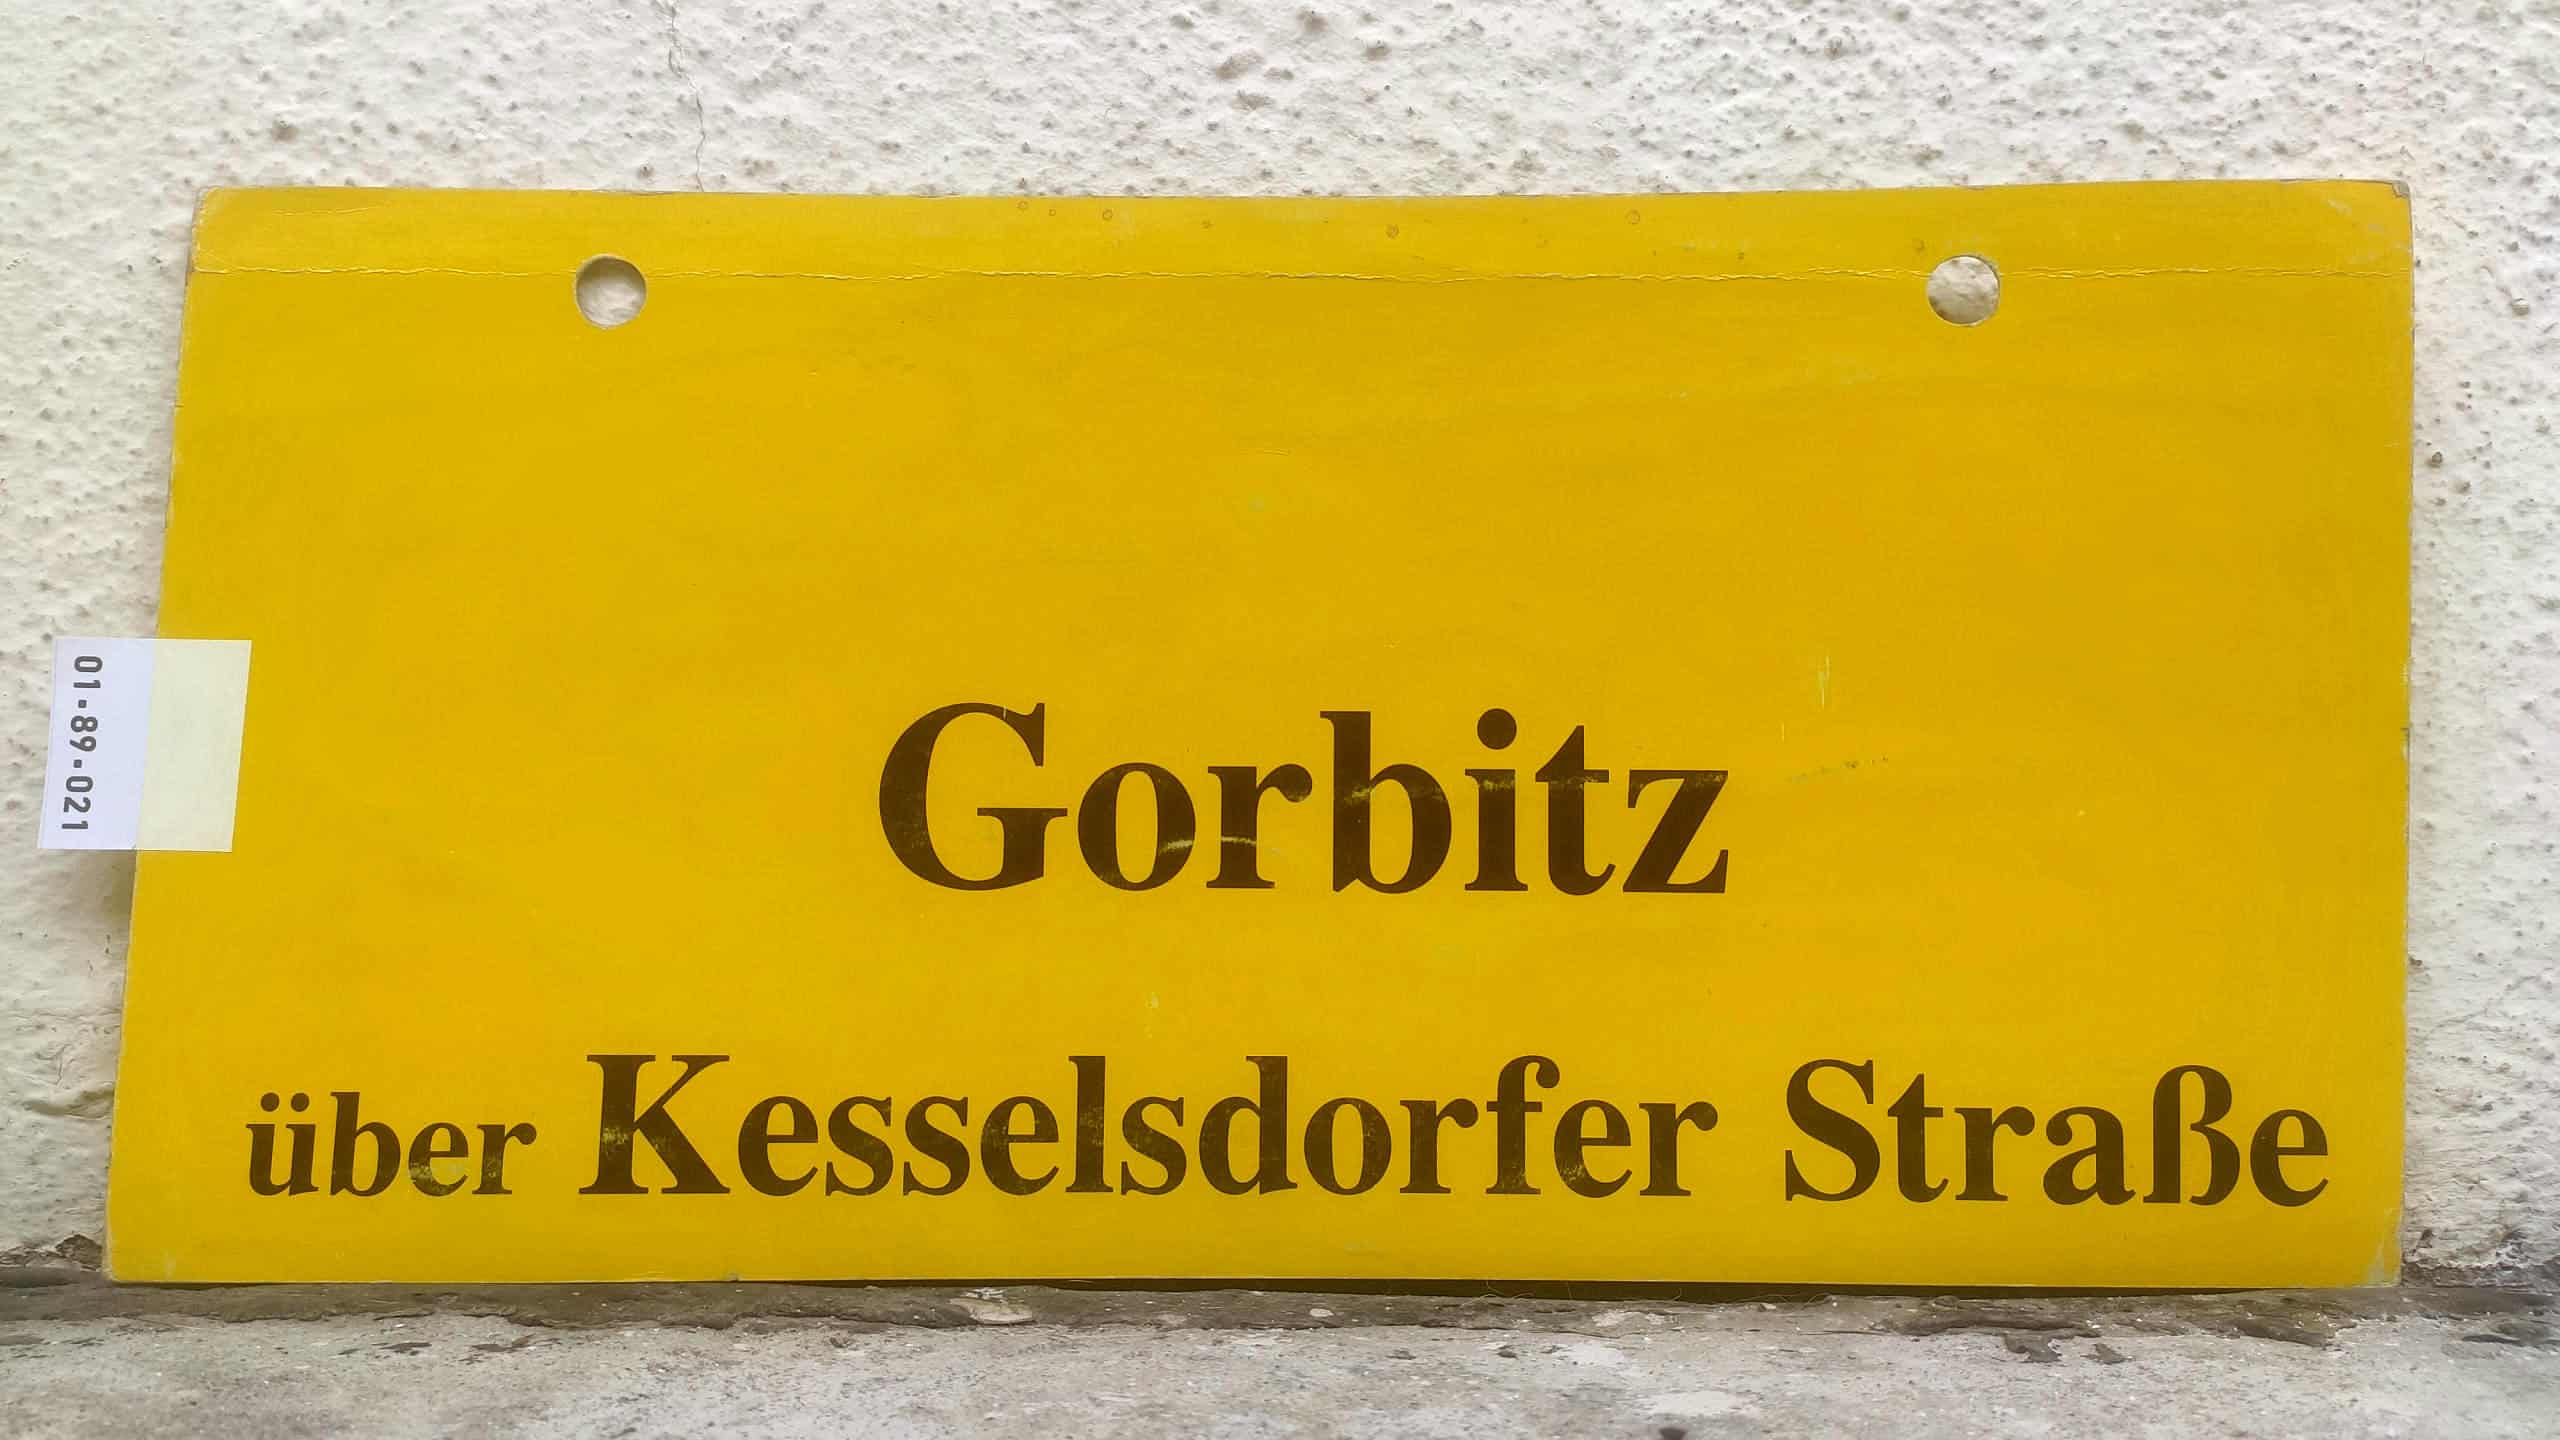 Gorbitz über Kesselsdorfer Straße